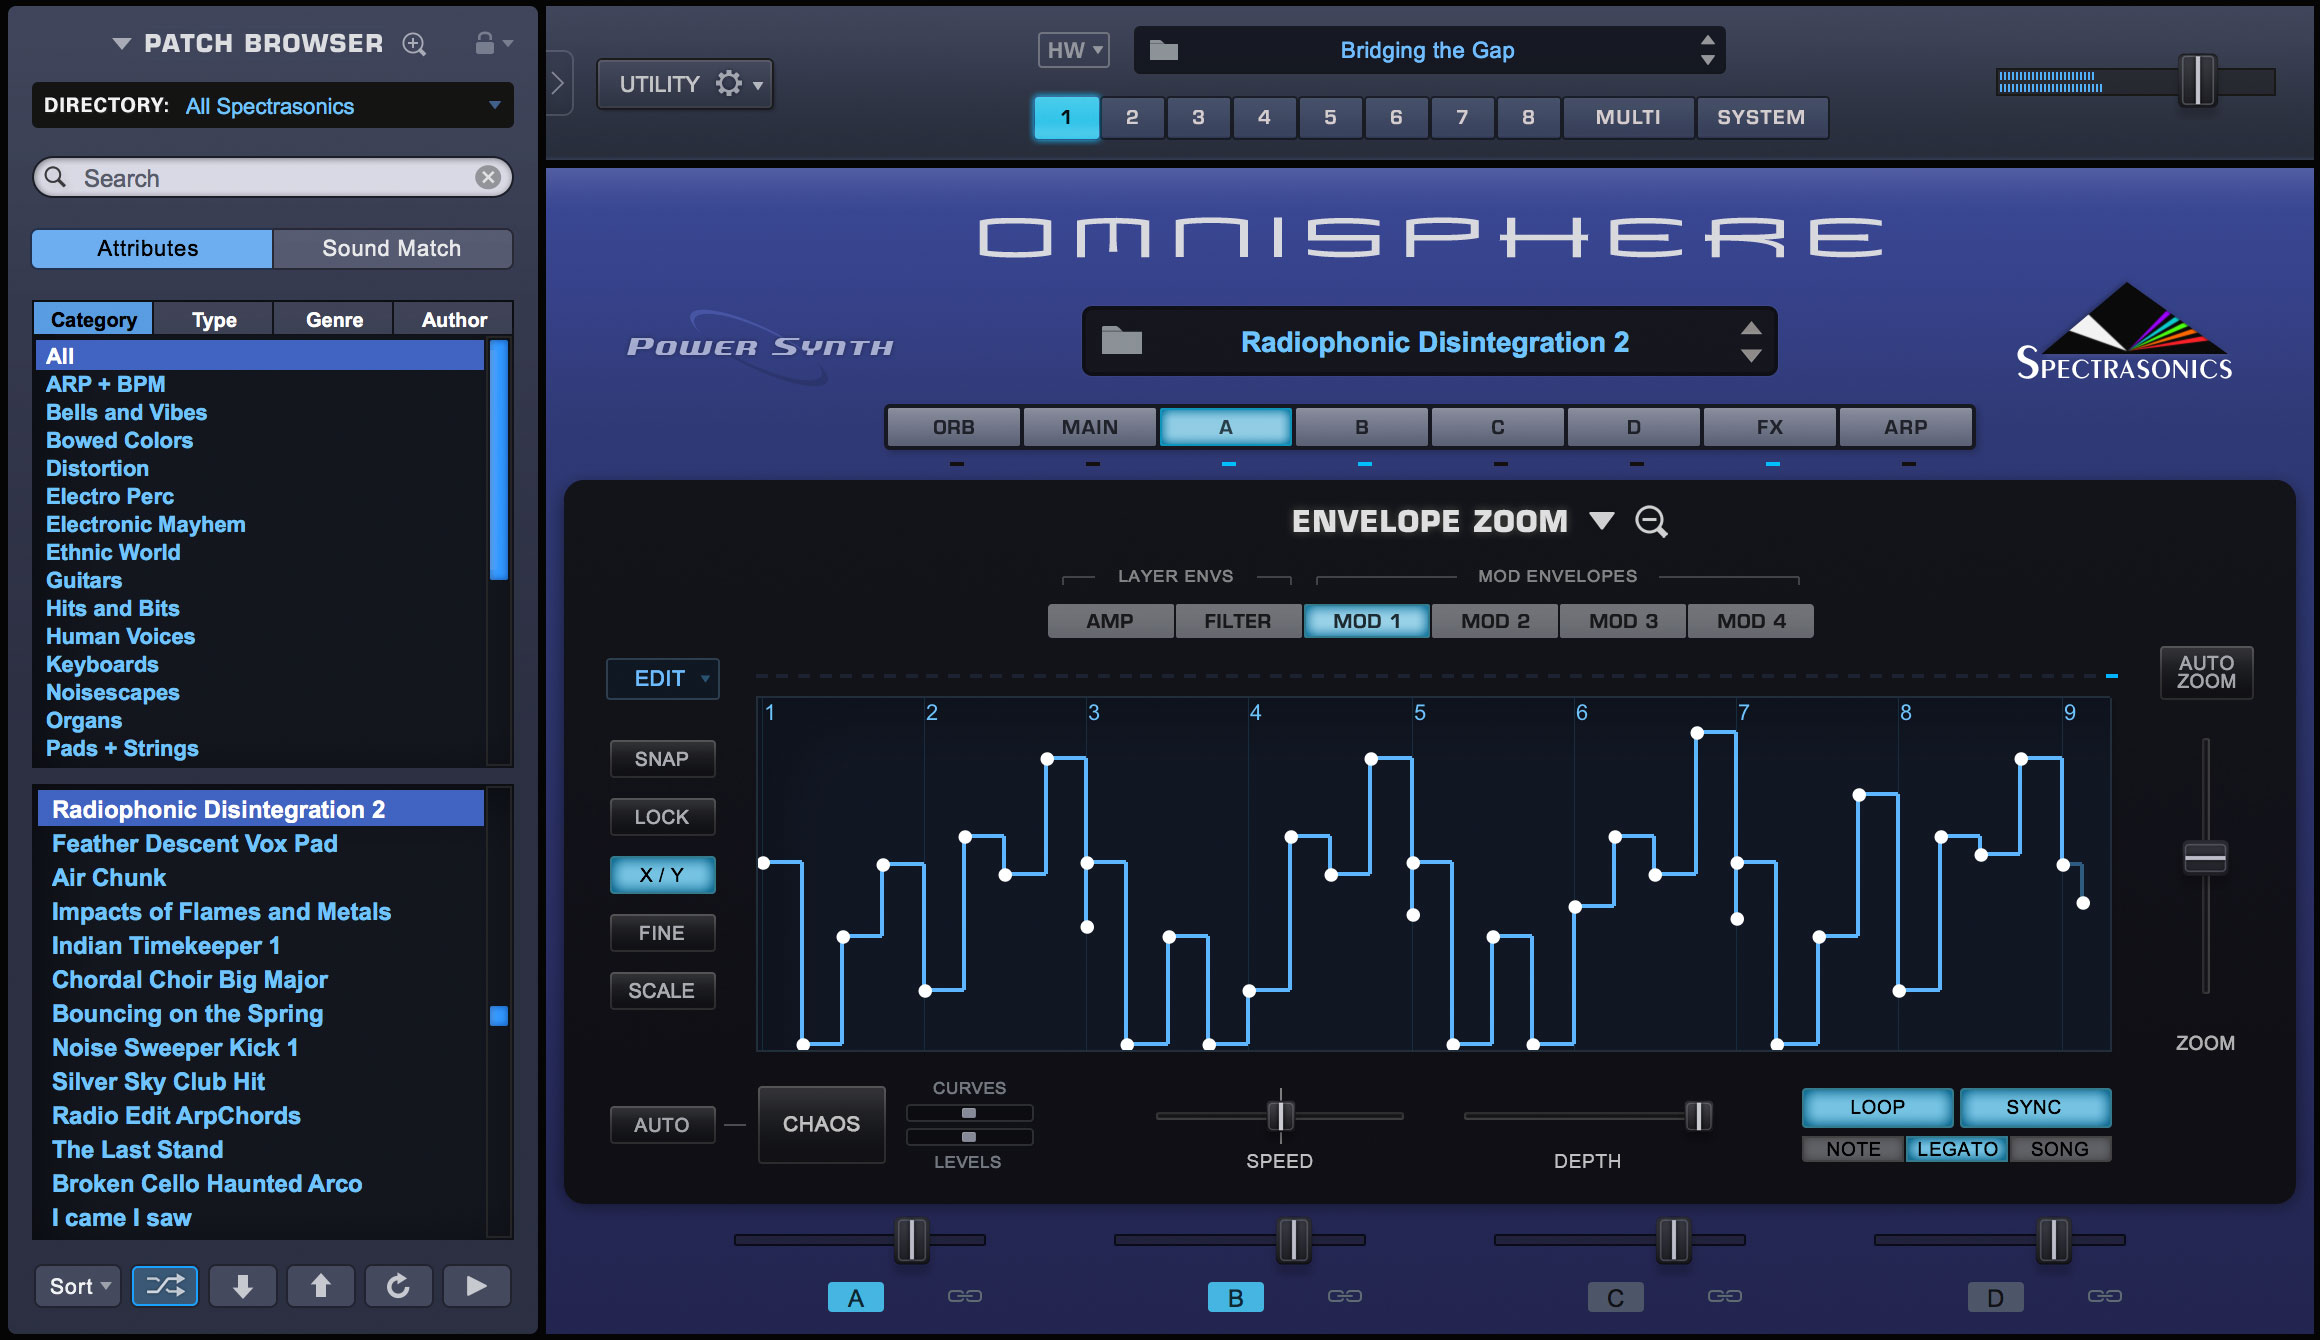 omnisphere 2 mediafire download